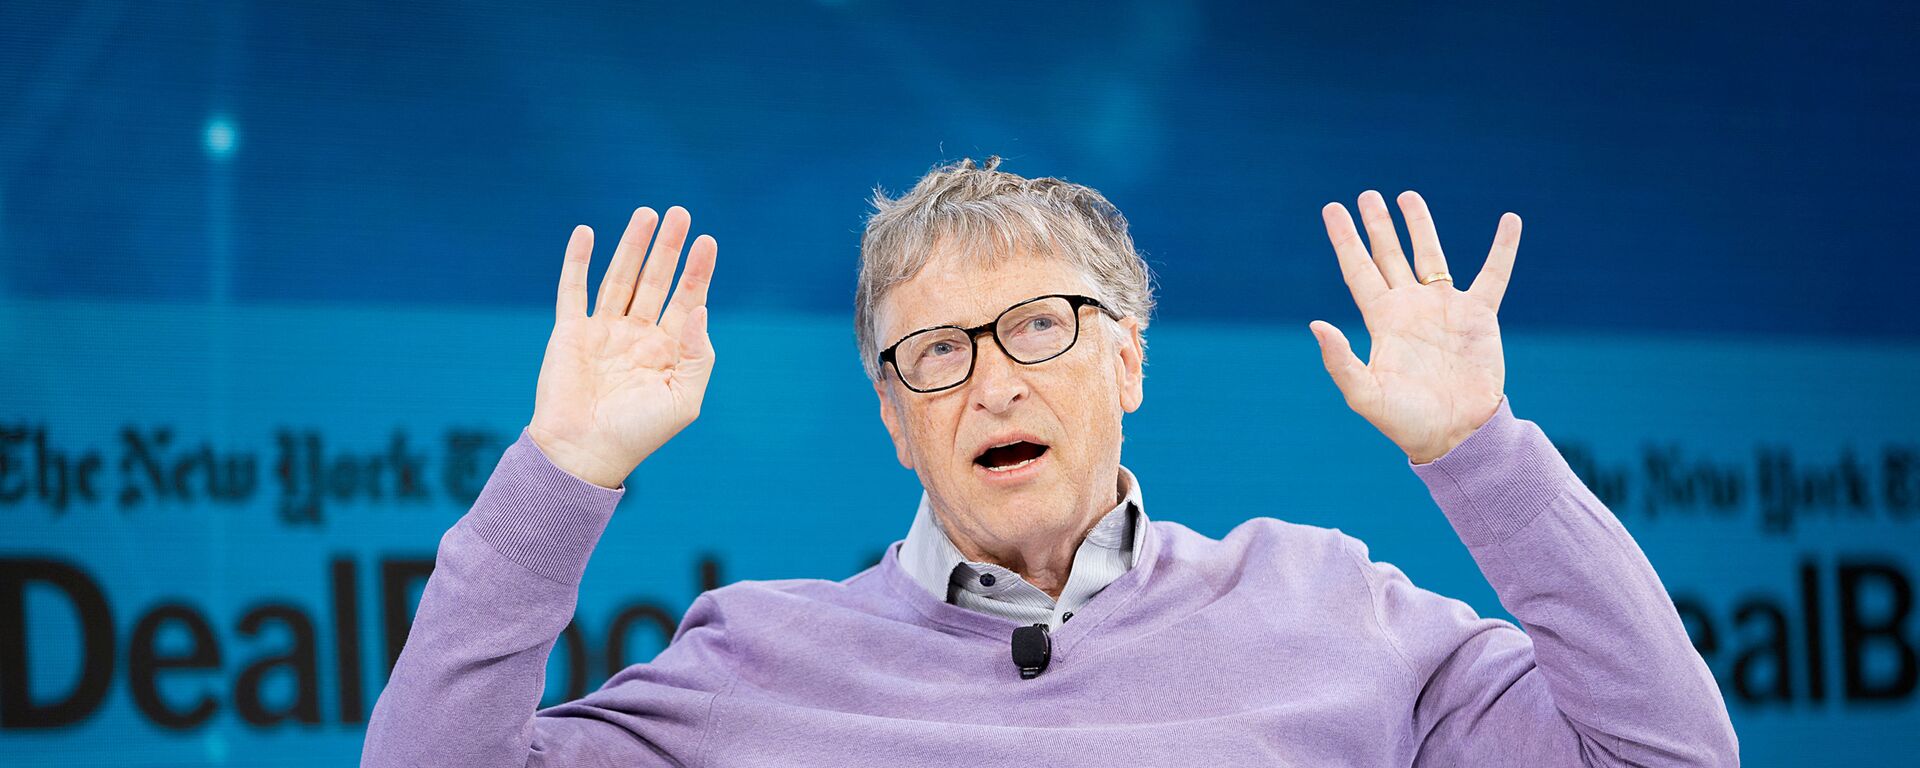 Bill Gates, Co-Chair, Bill & Melinda Gates Foundation speaks onstage at 2019 New York Times Dealbook on November 06, 2019 in New York City. - Sputnik International, 1920, 22.09.2021